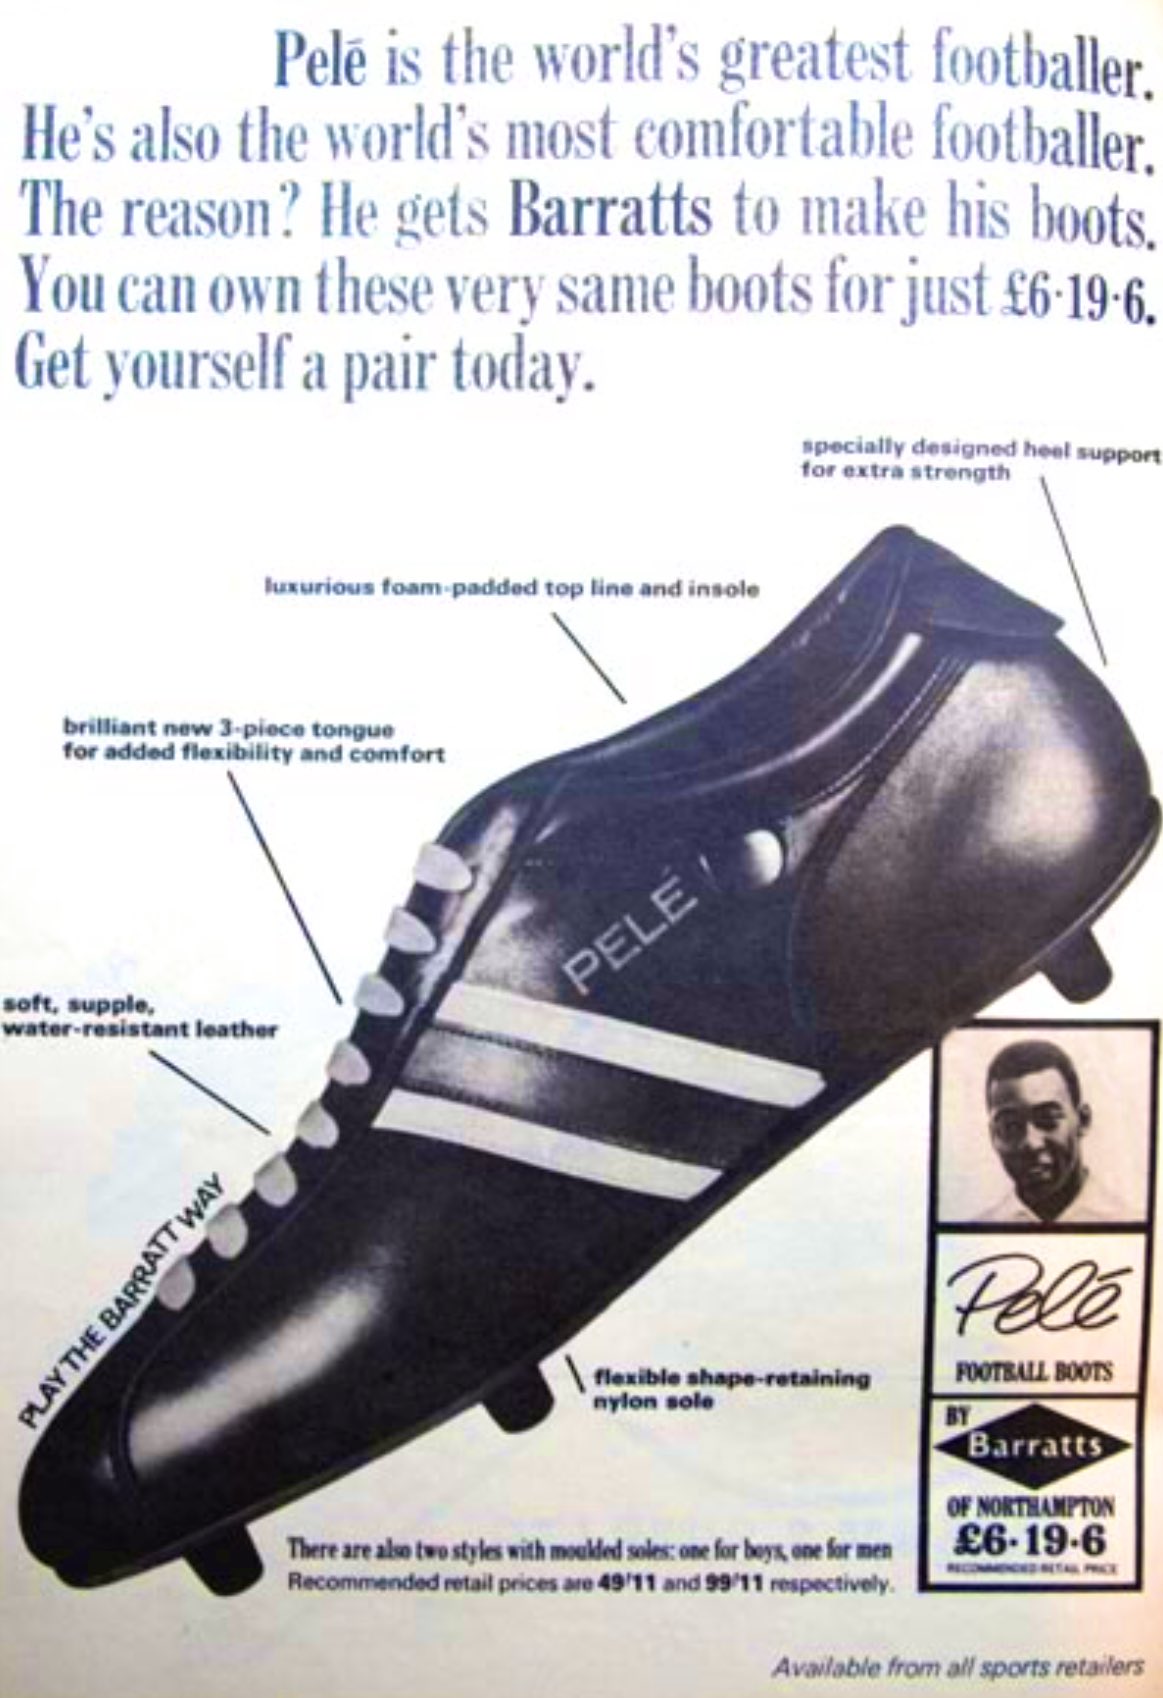 Football on X: "Advertisement Barratts “Pele” Boots #FootyBoots #Ads https://t.co/OcSQV4WJp0" / X